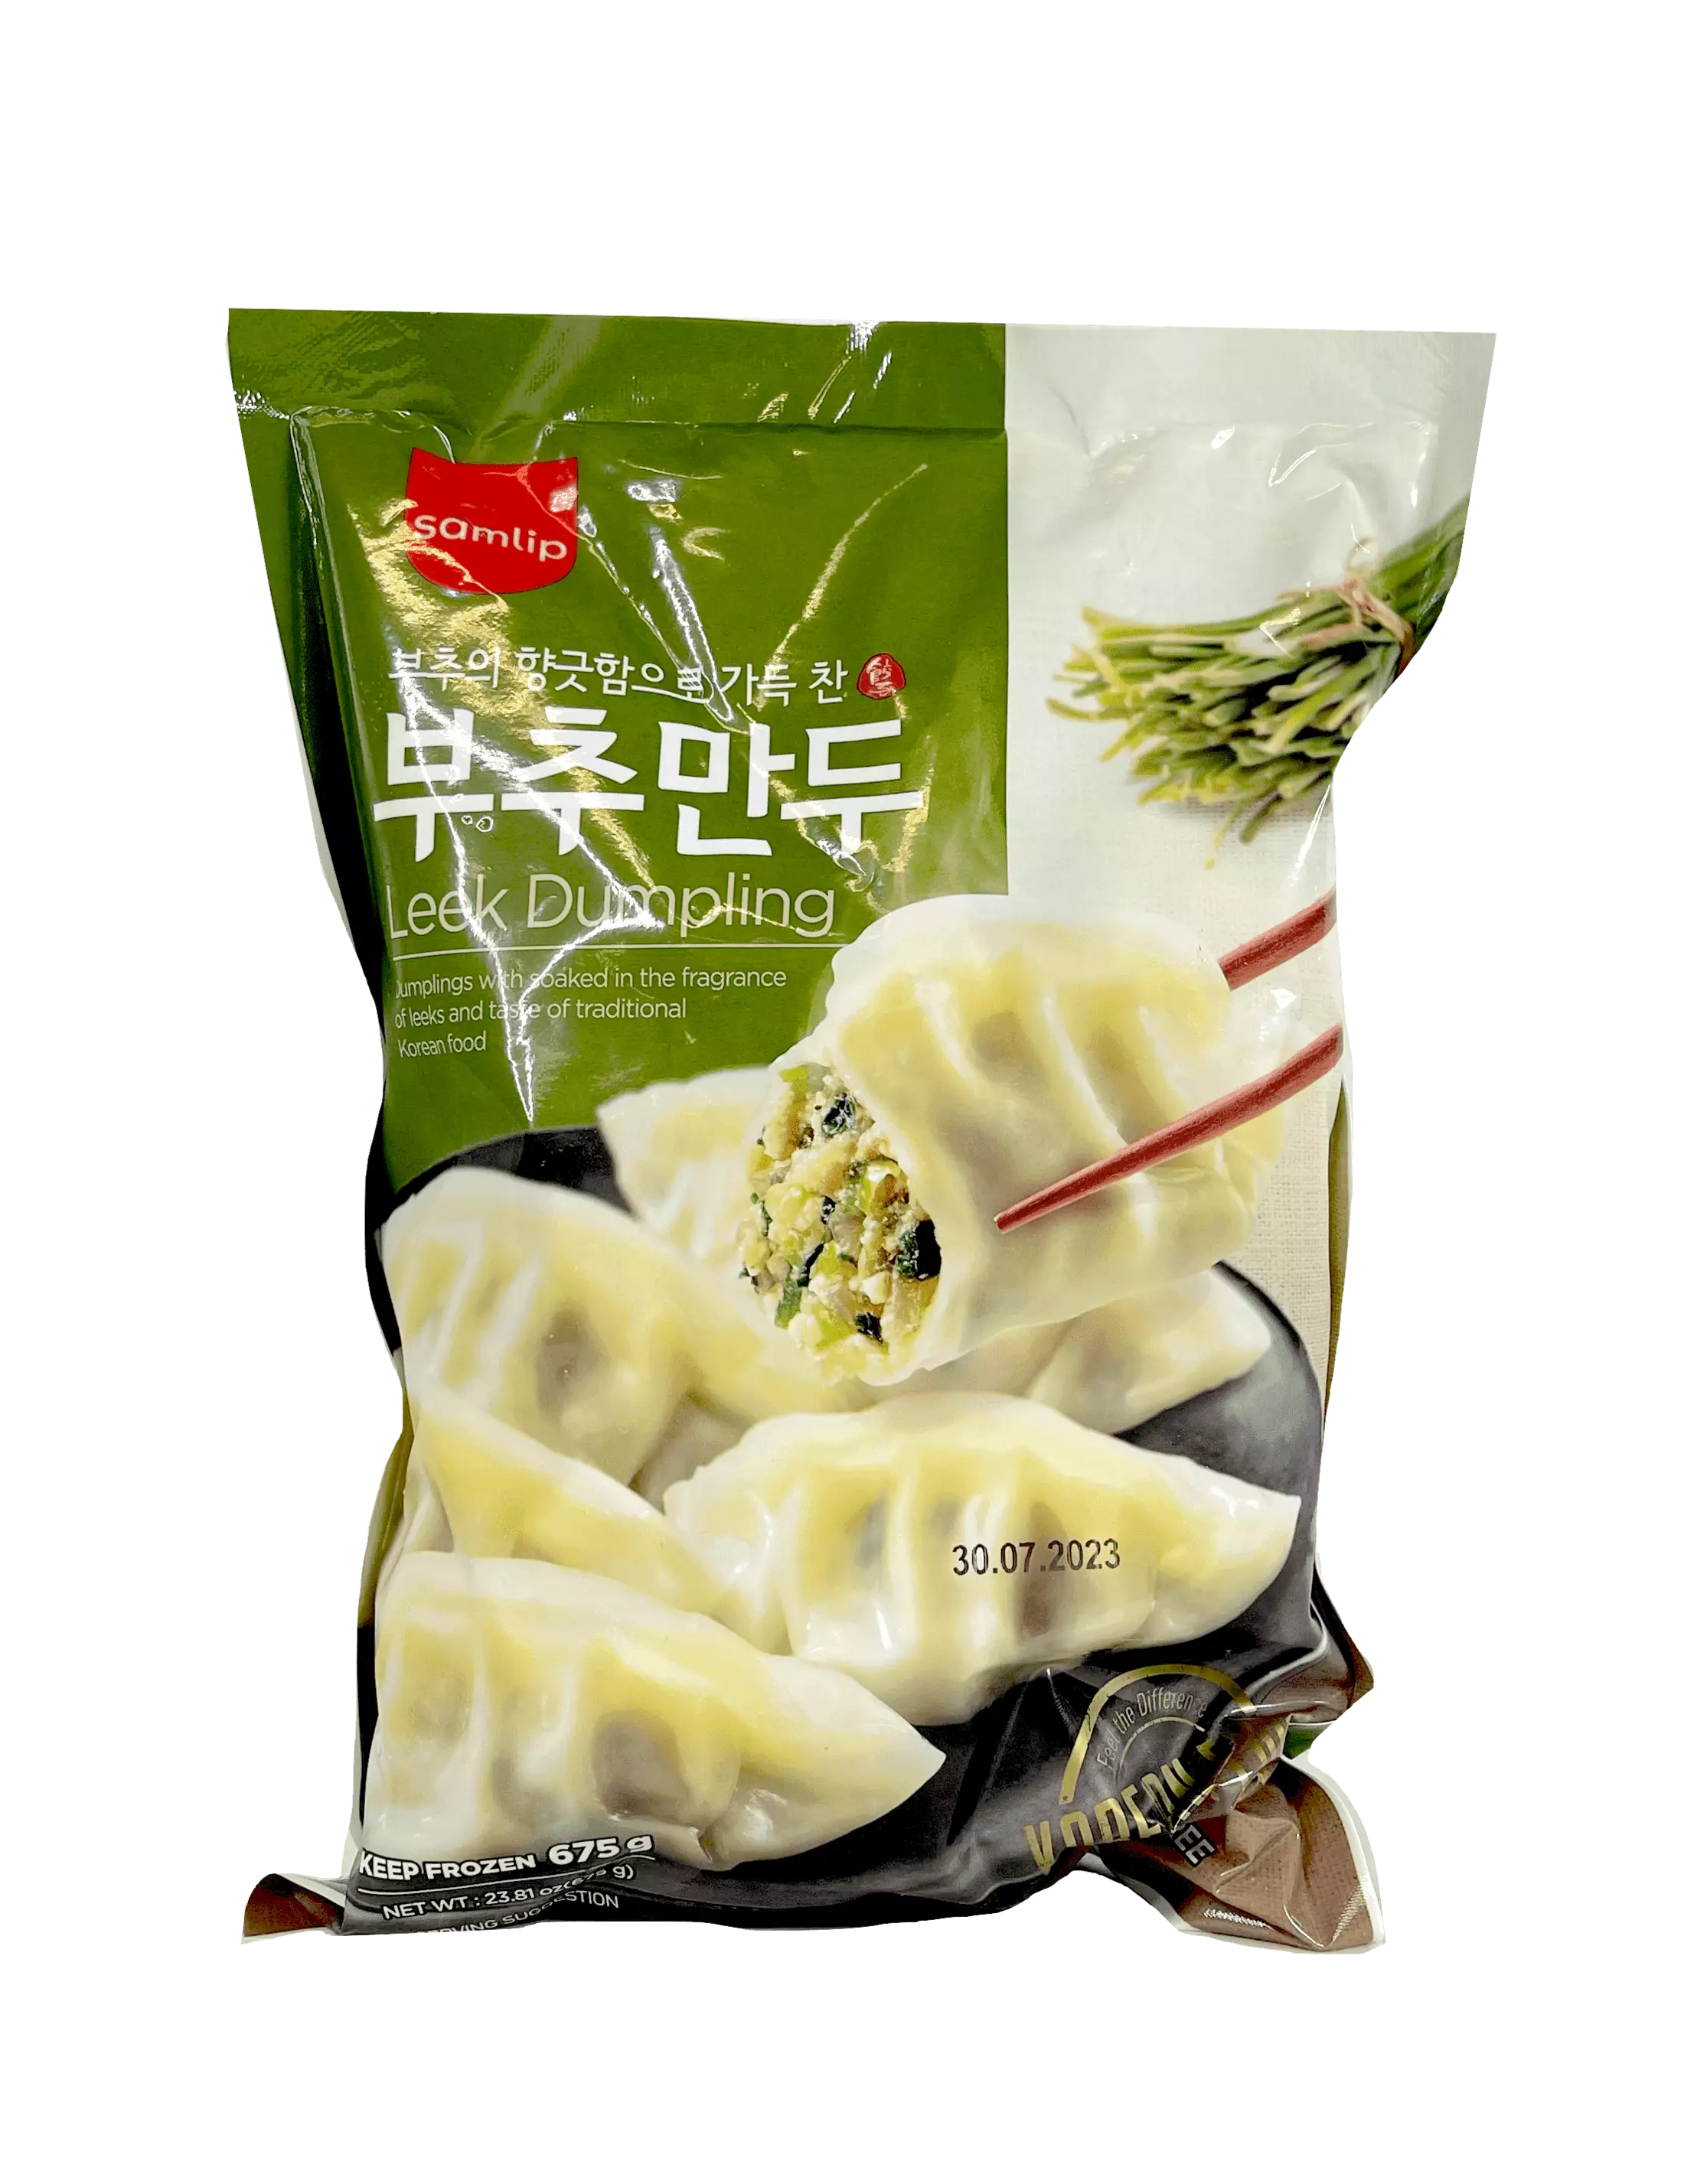 Dumpling Gräslök 675g Samlip koreansk